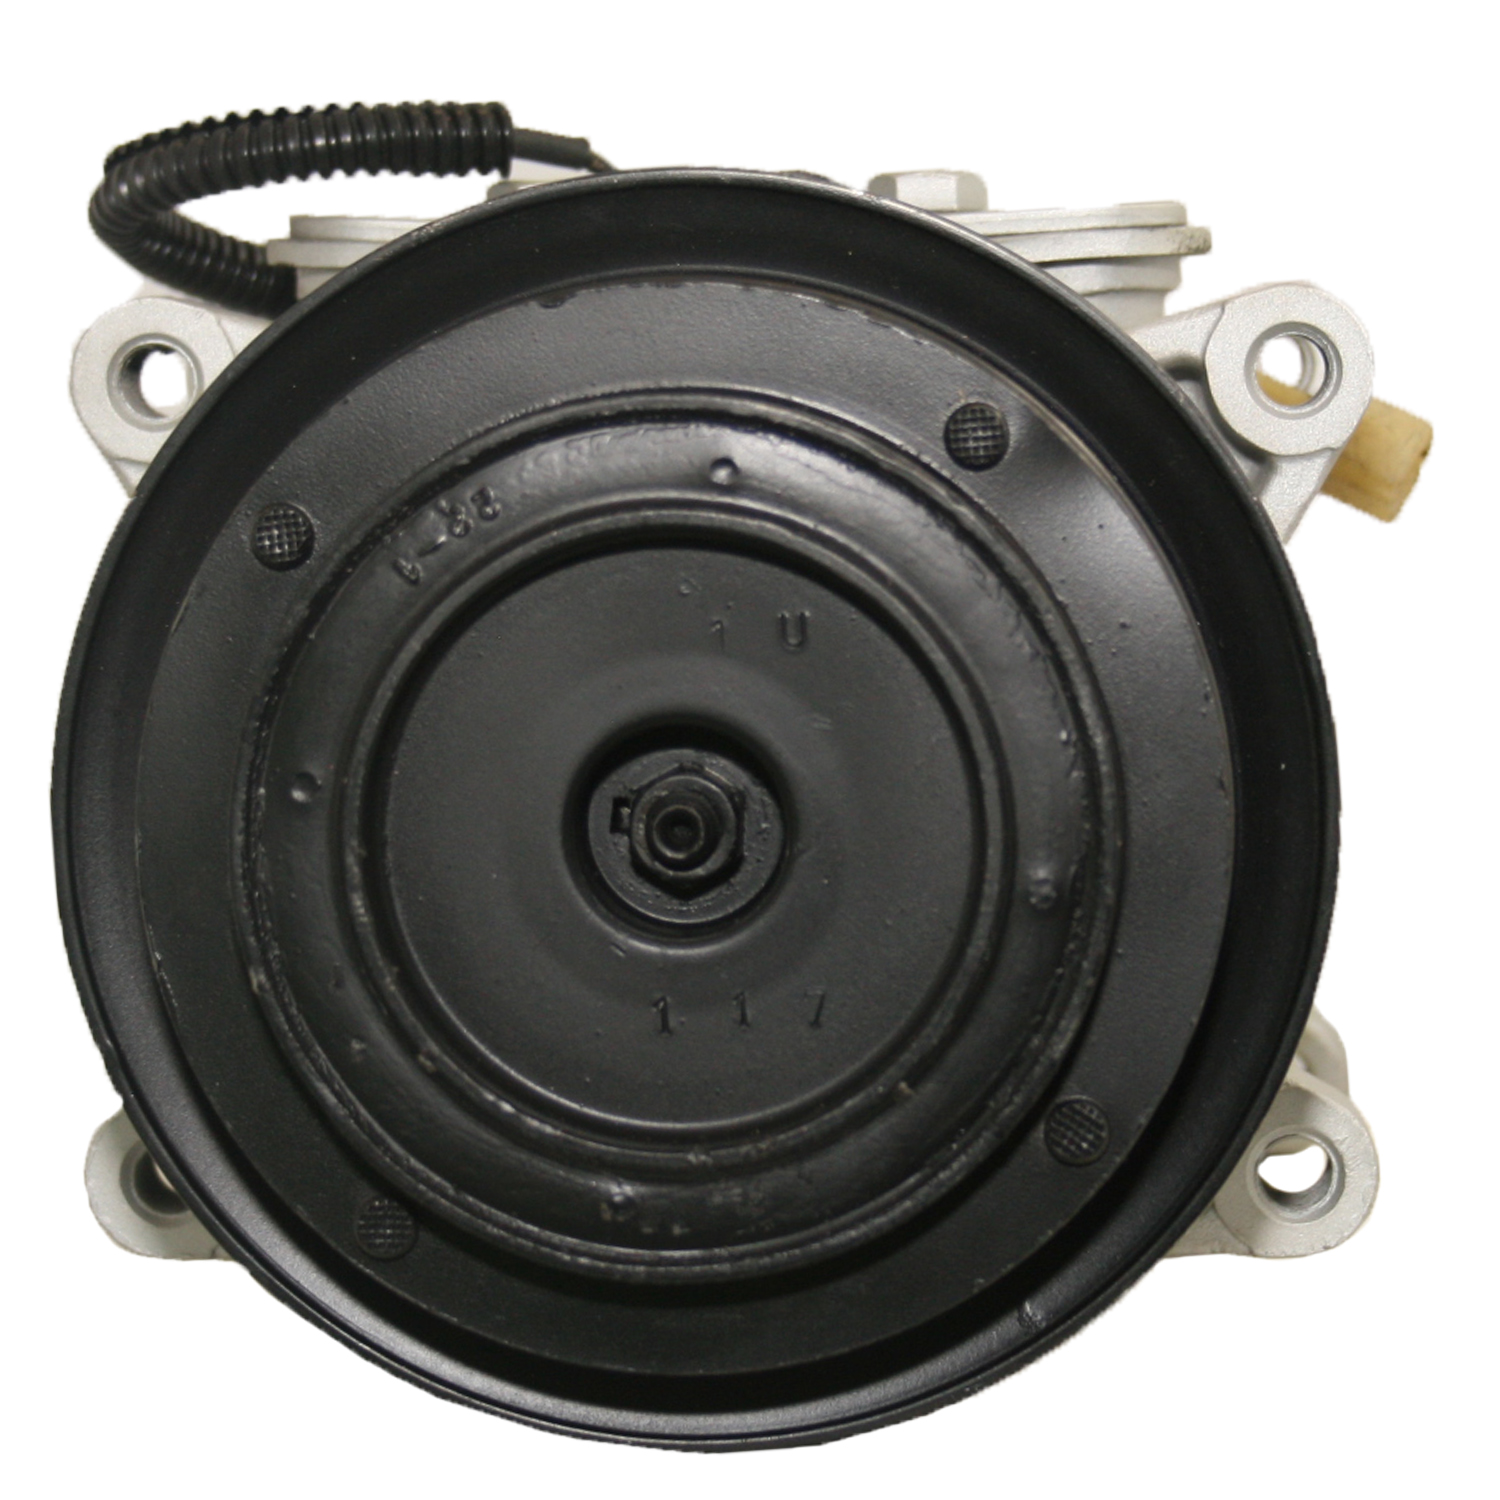 TCW Compressor 31010.101 Remanufactured Product Image field_60b6a13a6e67c